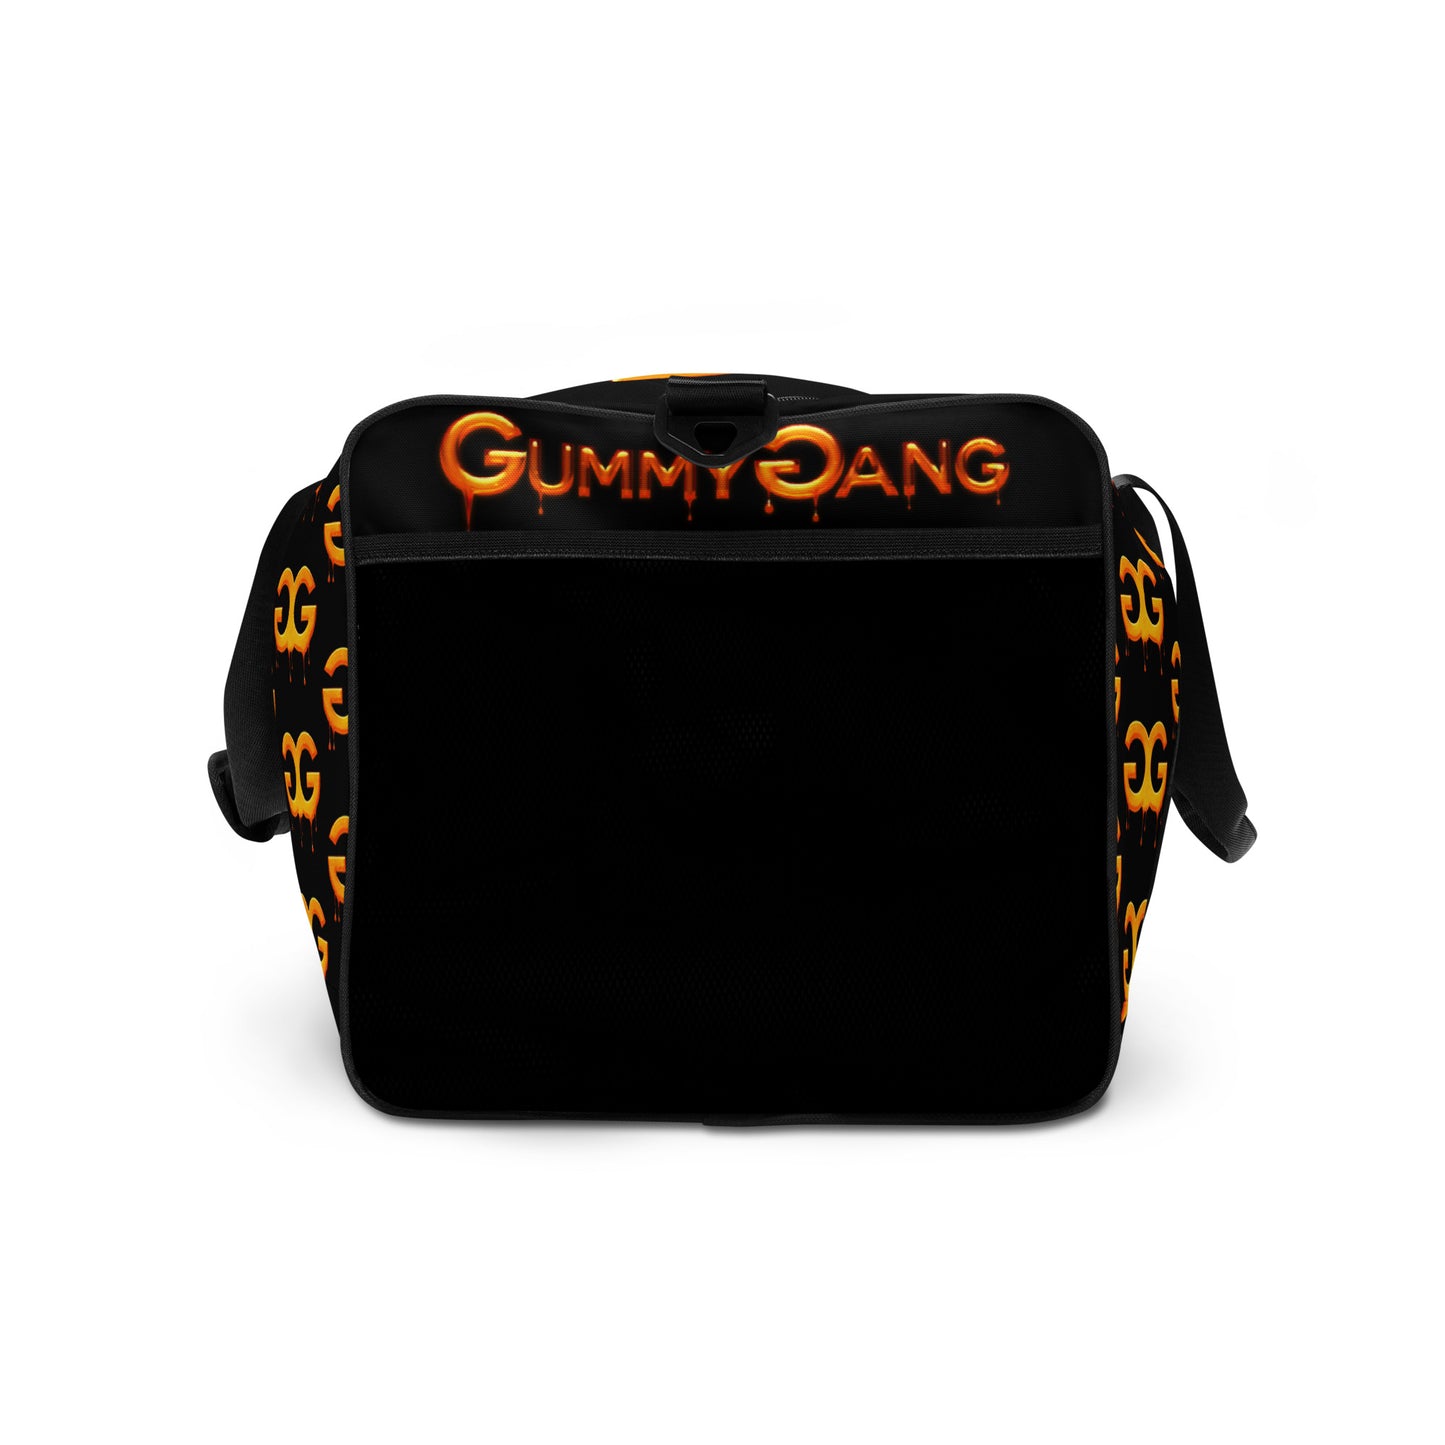 Gummy Gang Duffle bag